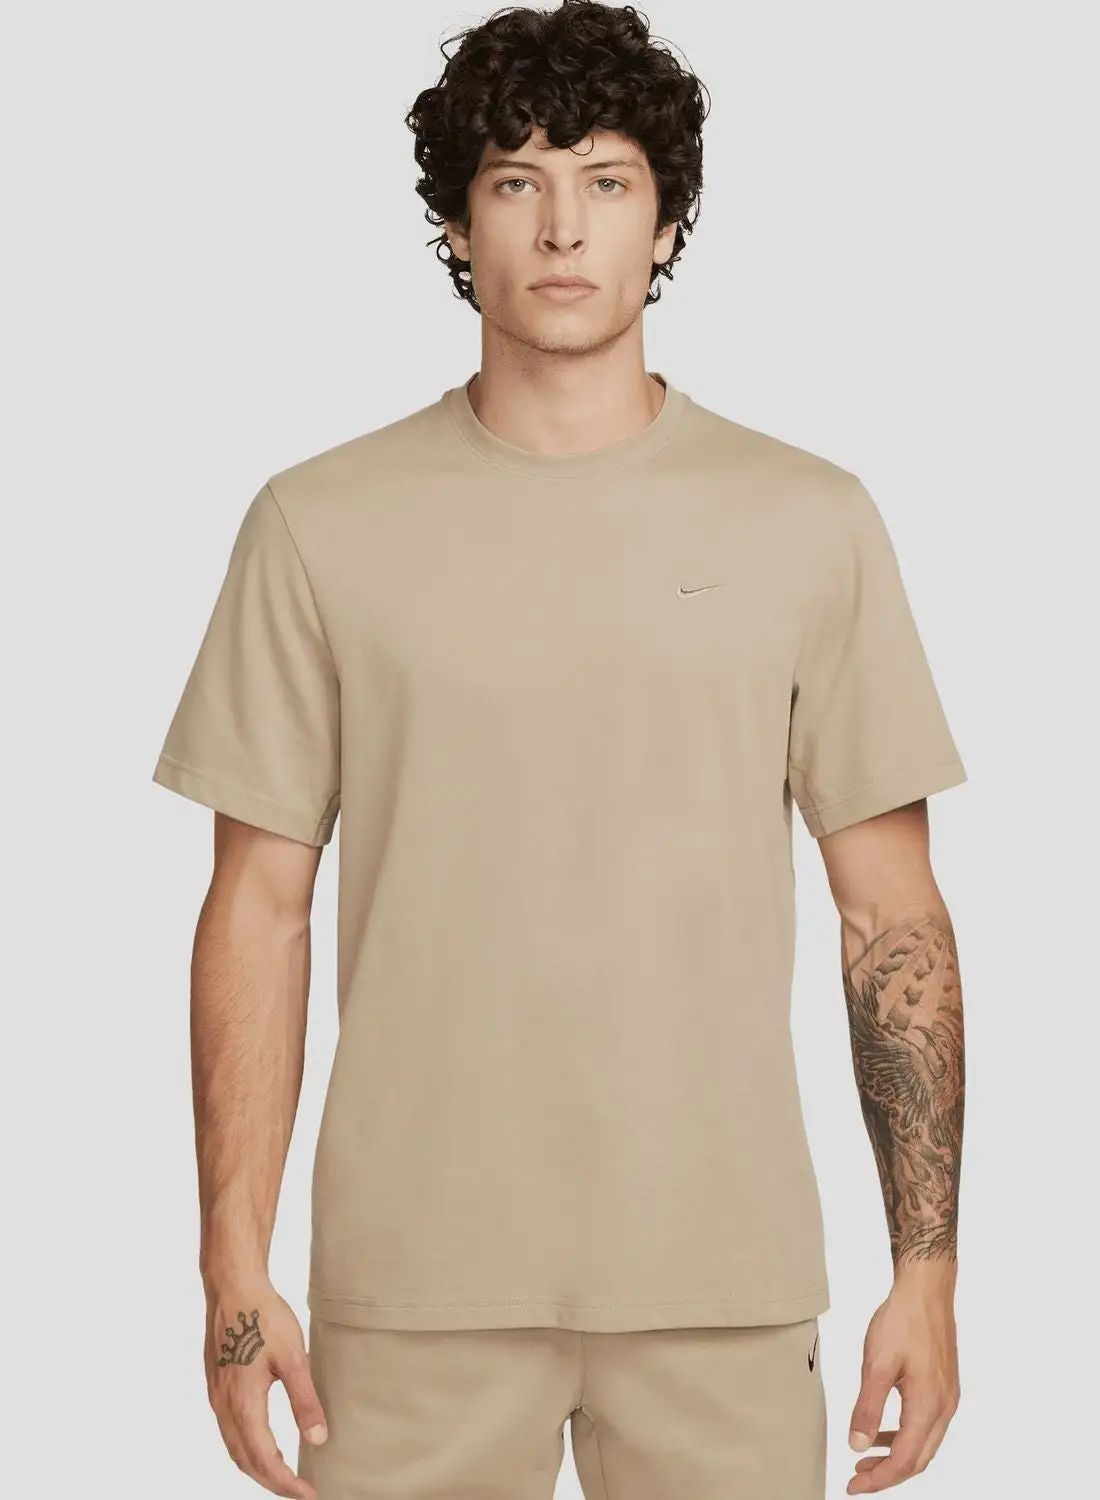 Nike Dri-Fit Primary T-Shirt